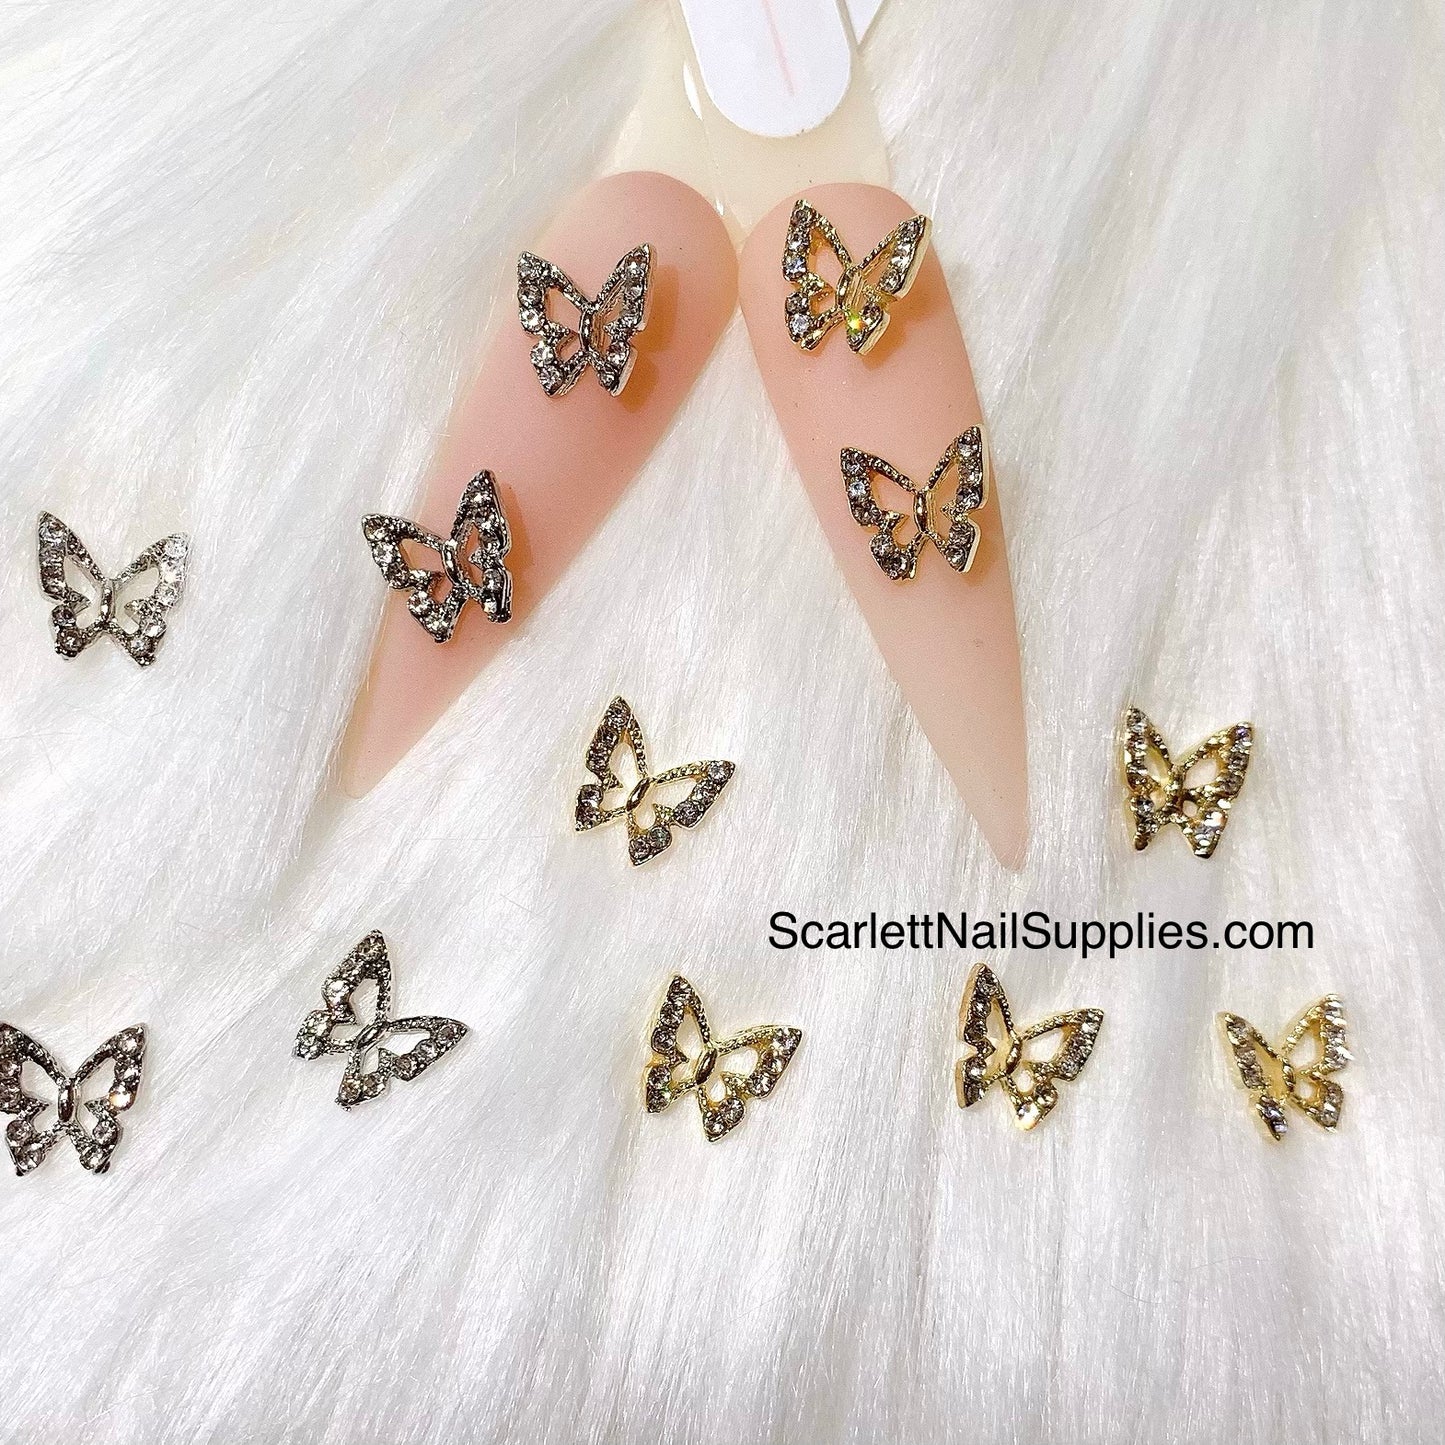 2pcs Butterfly Nail Charm - Metal Charm Nail Decorations